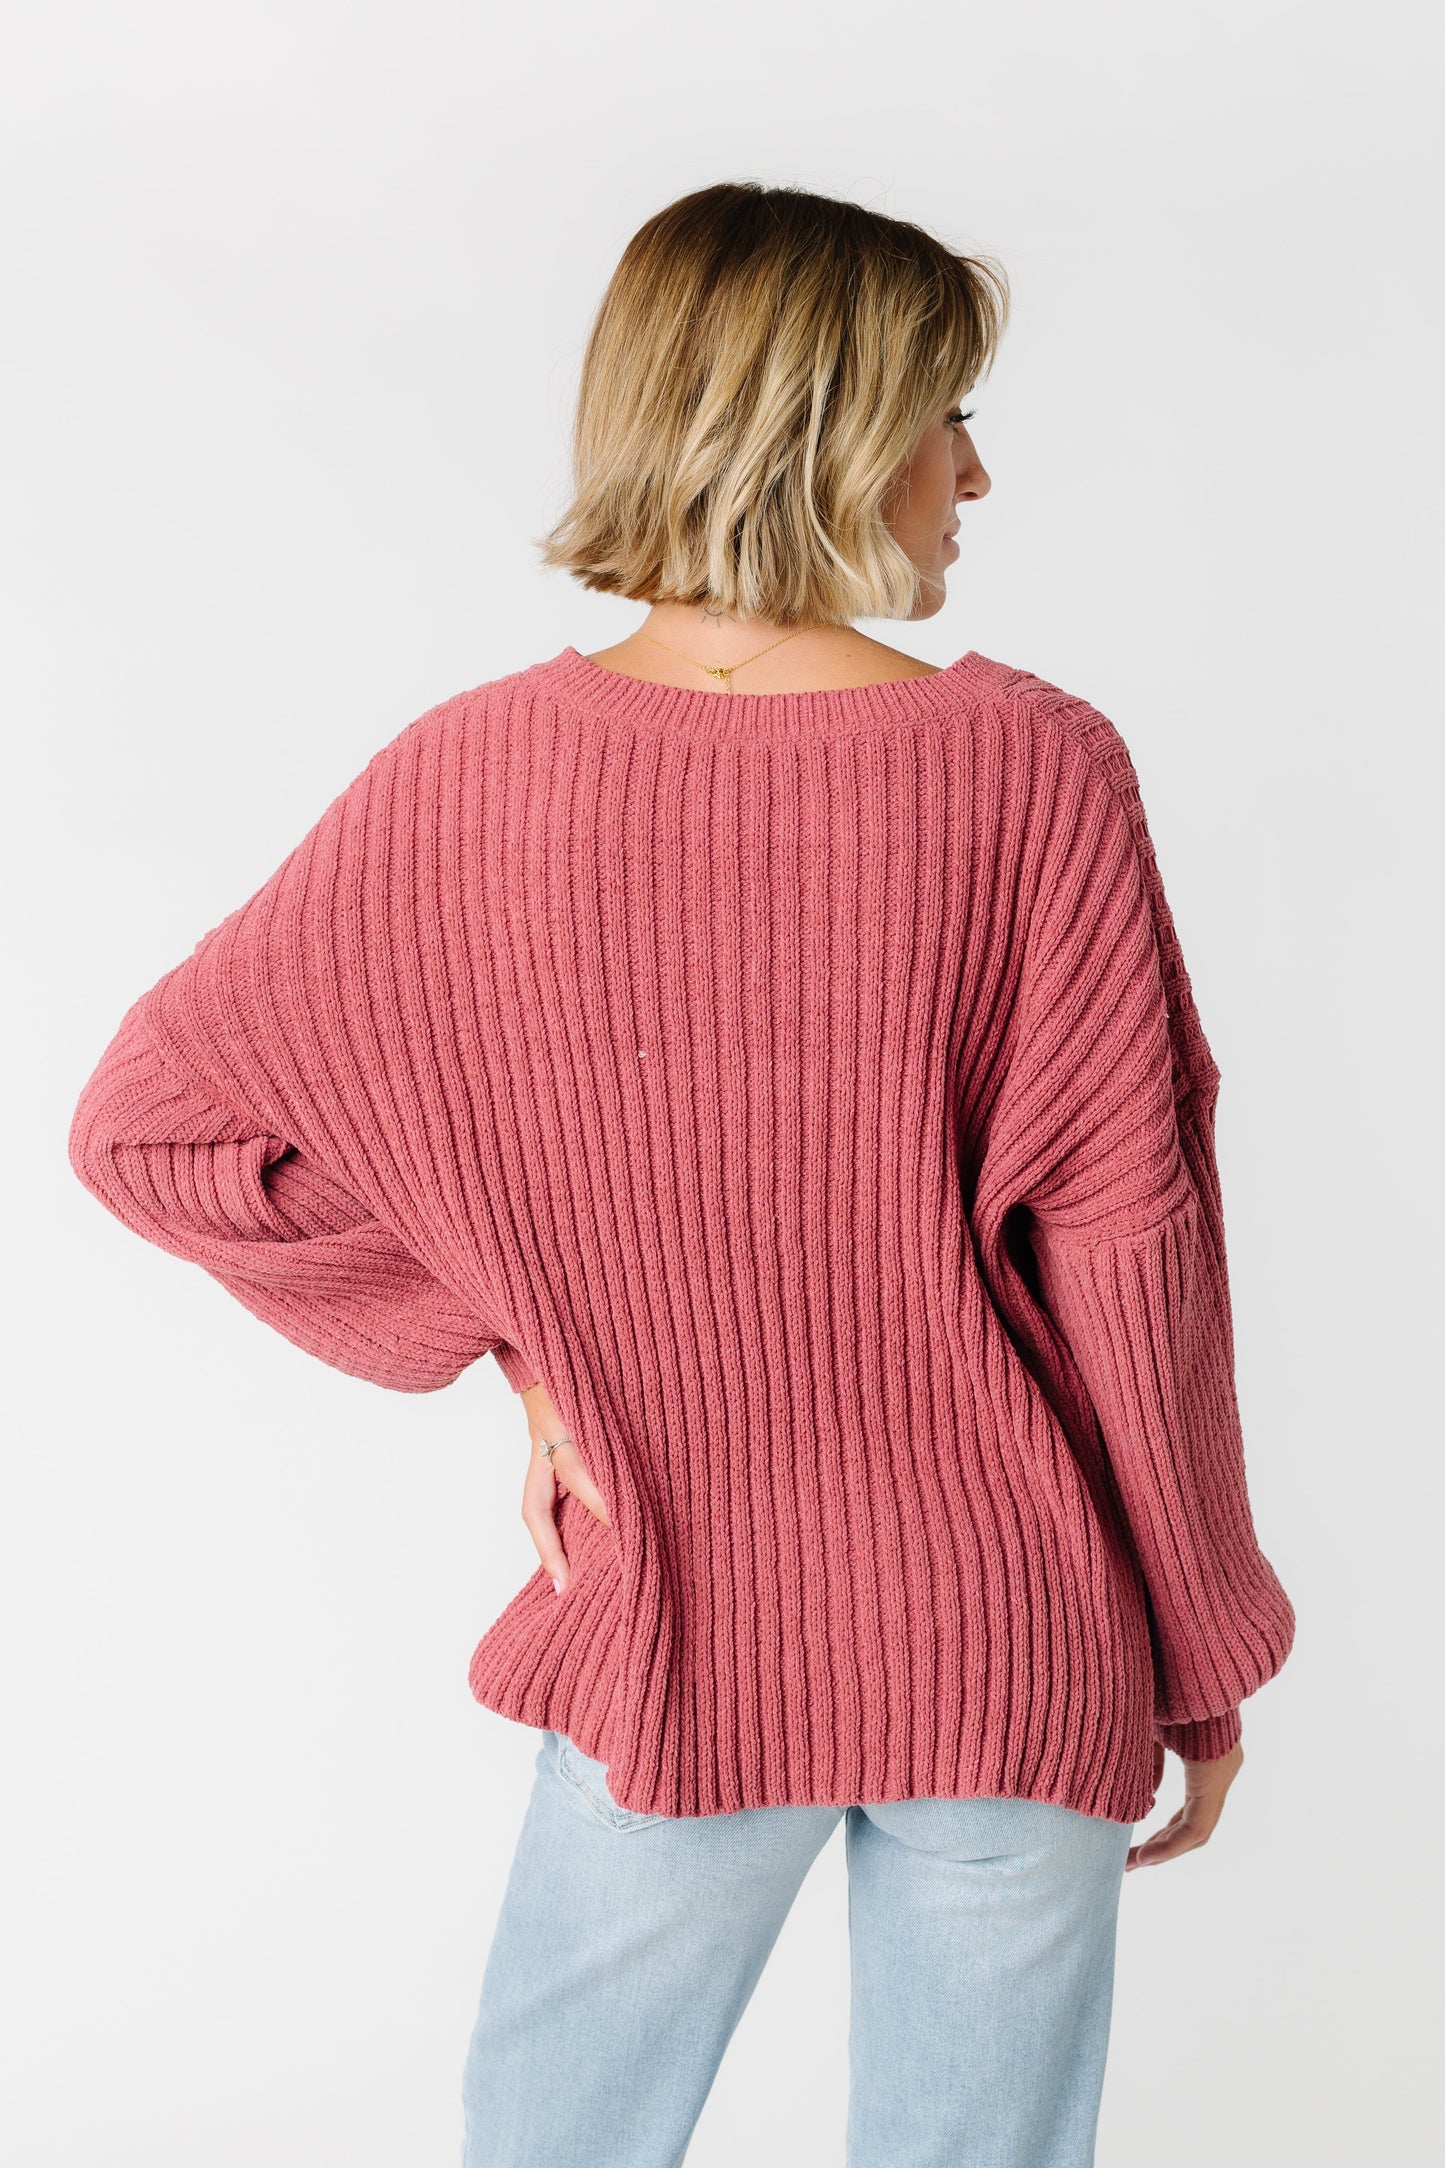 Textured Chenille Sweater - Ginger WOMEN'S SWEATERS Wishlist 